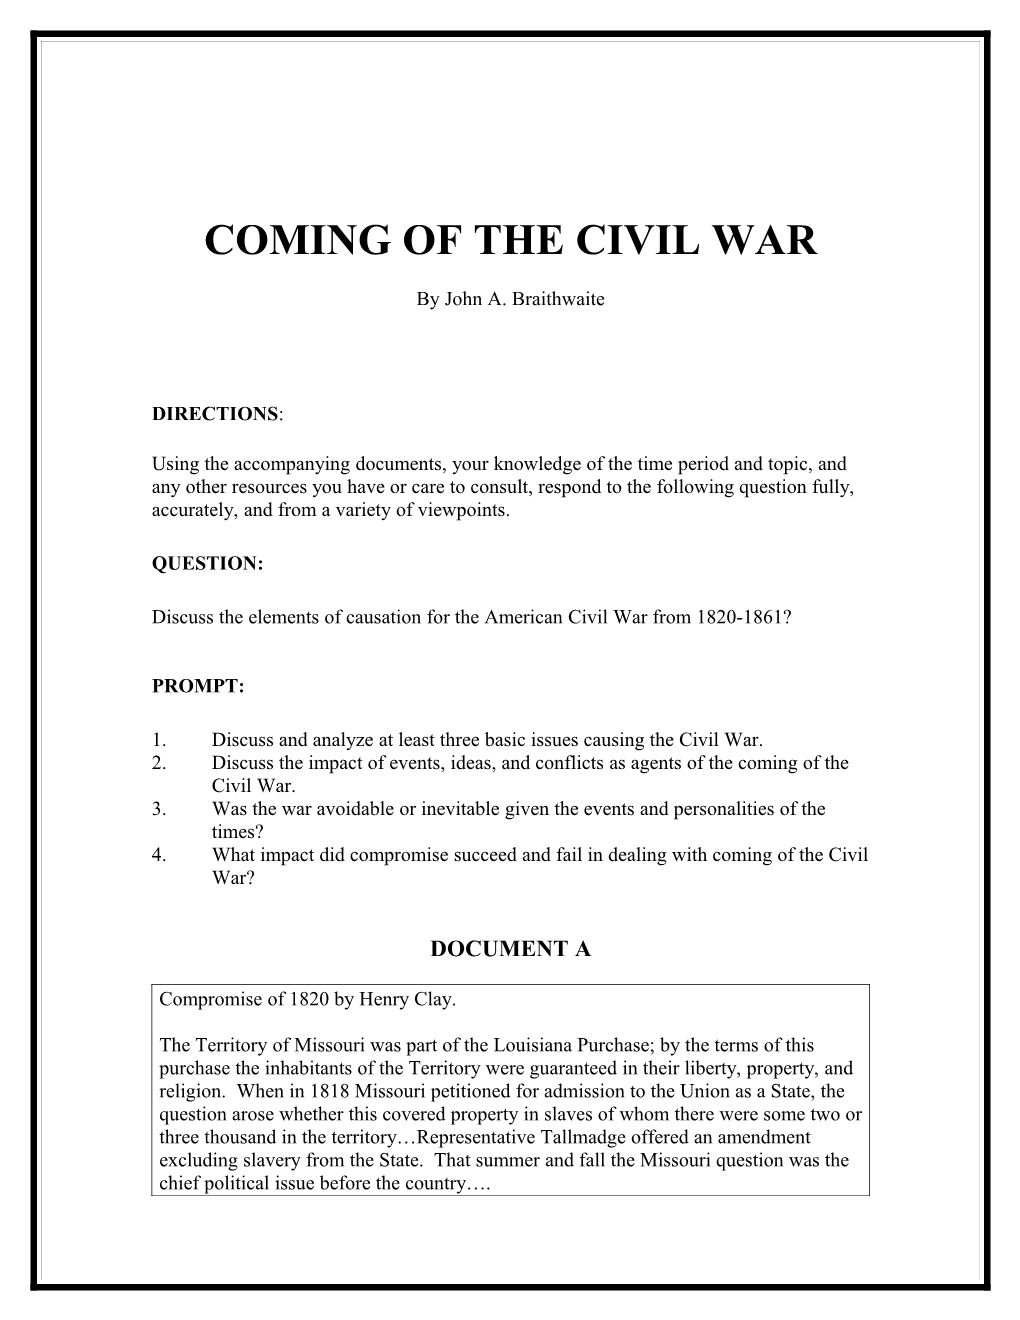 Coming of the Civil War